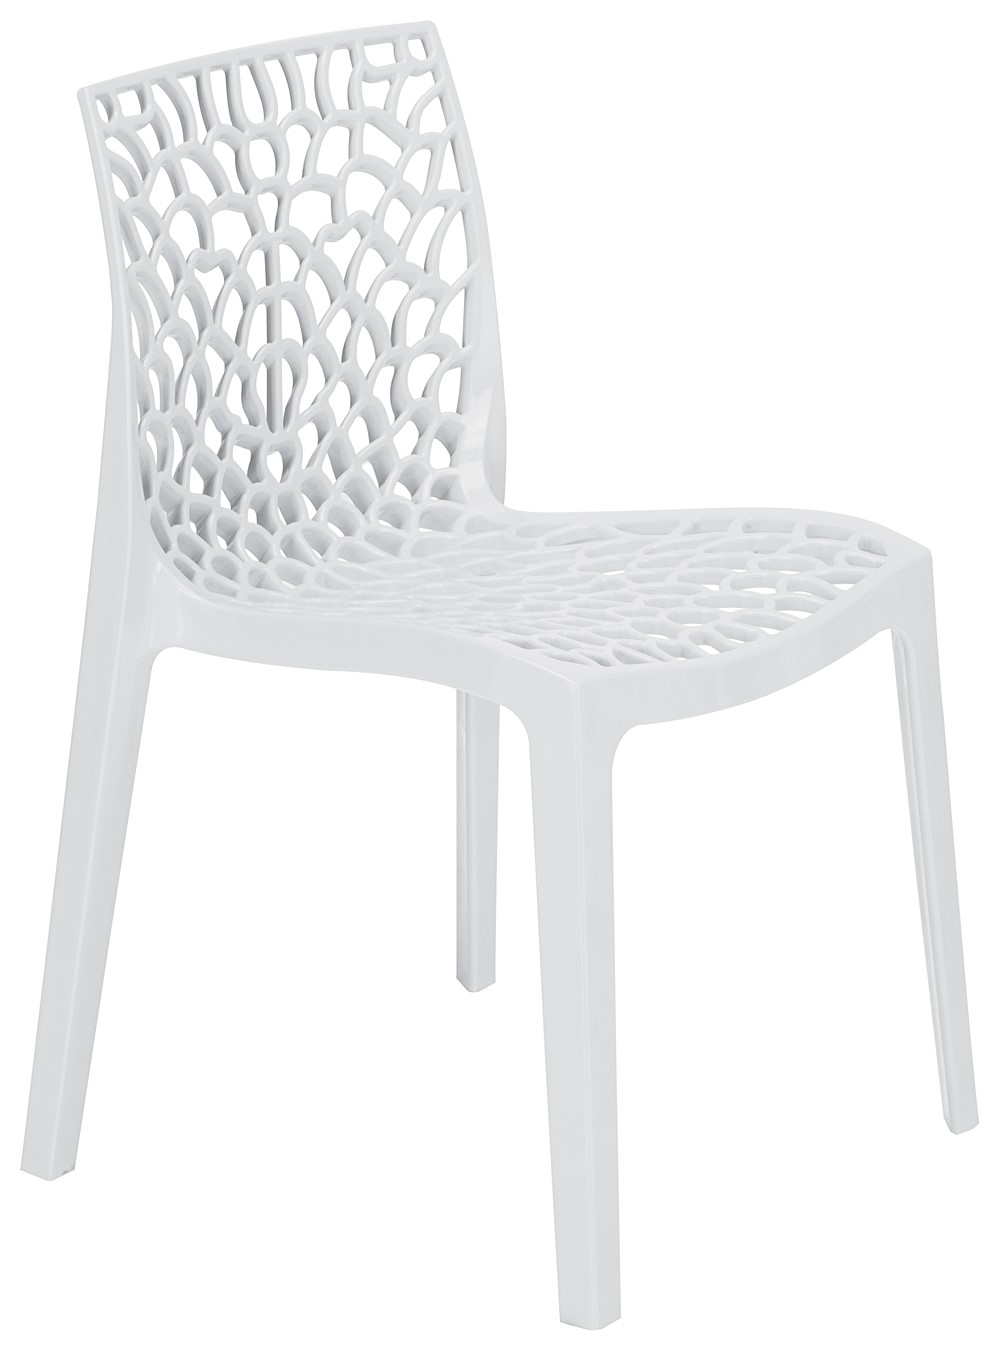 Chaise de jardin Gruvyer polypropylène 52x51x81cm Blanc